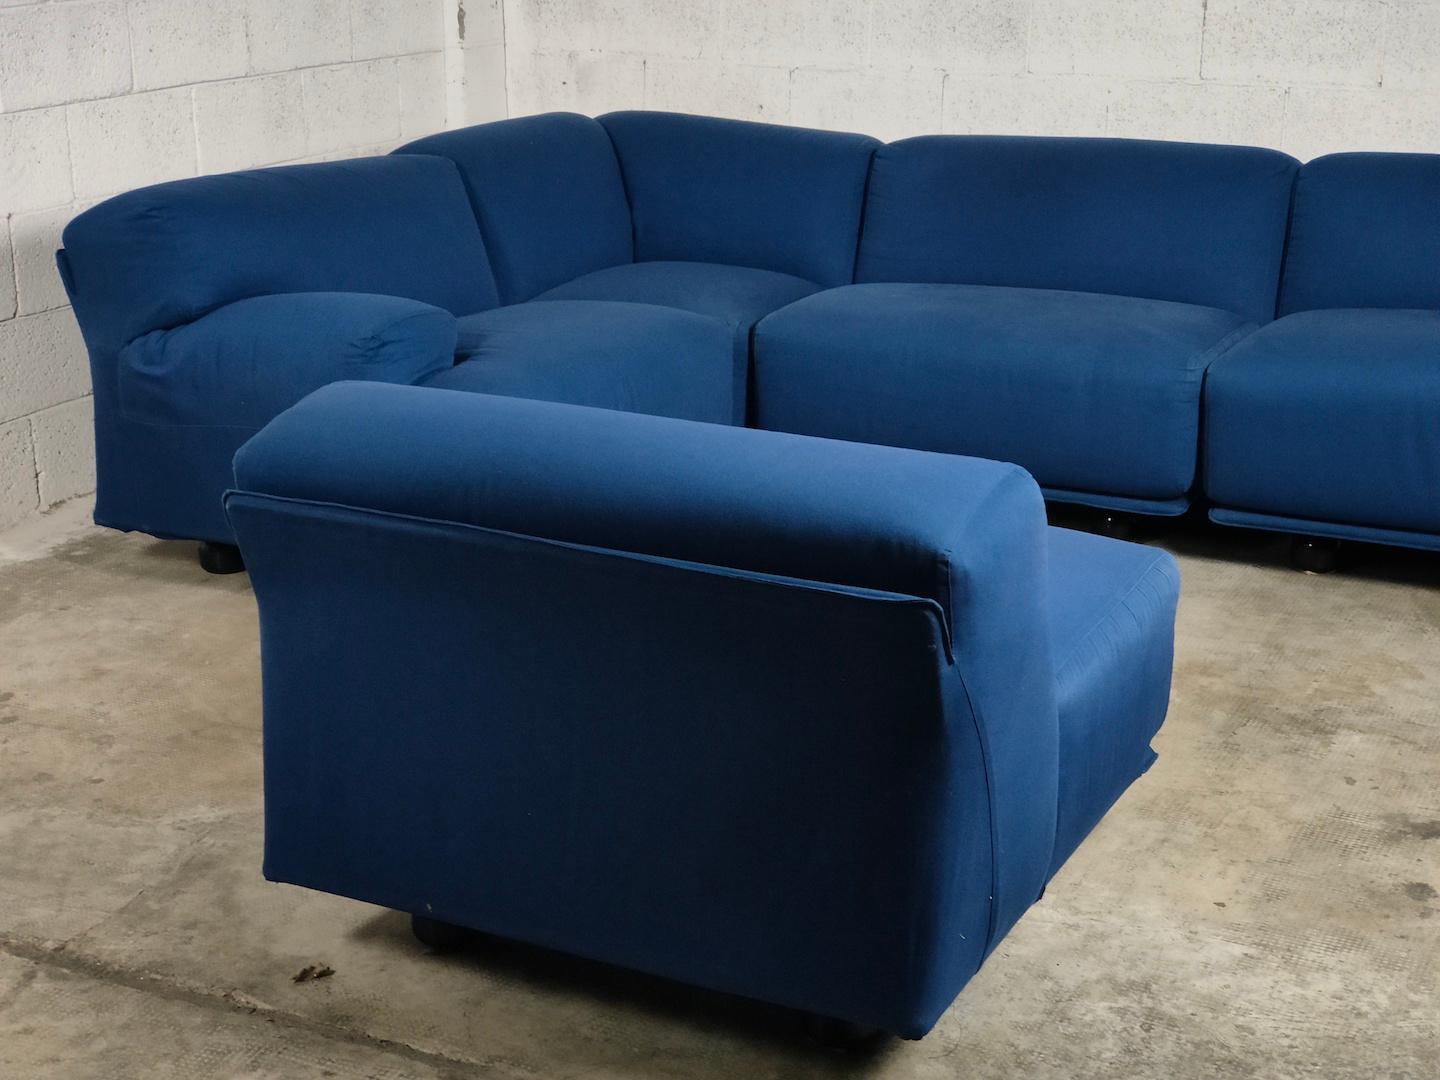 Fabric Fiandra modular sofa by Vico Magistretti for Cassina 70s For Sale